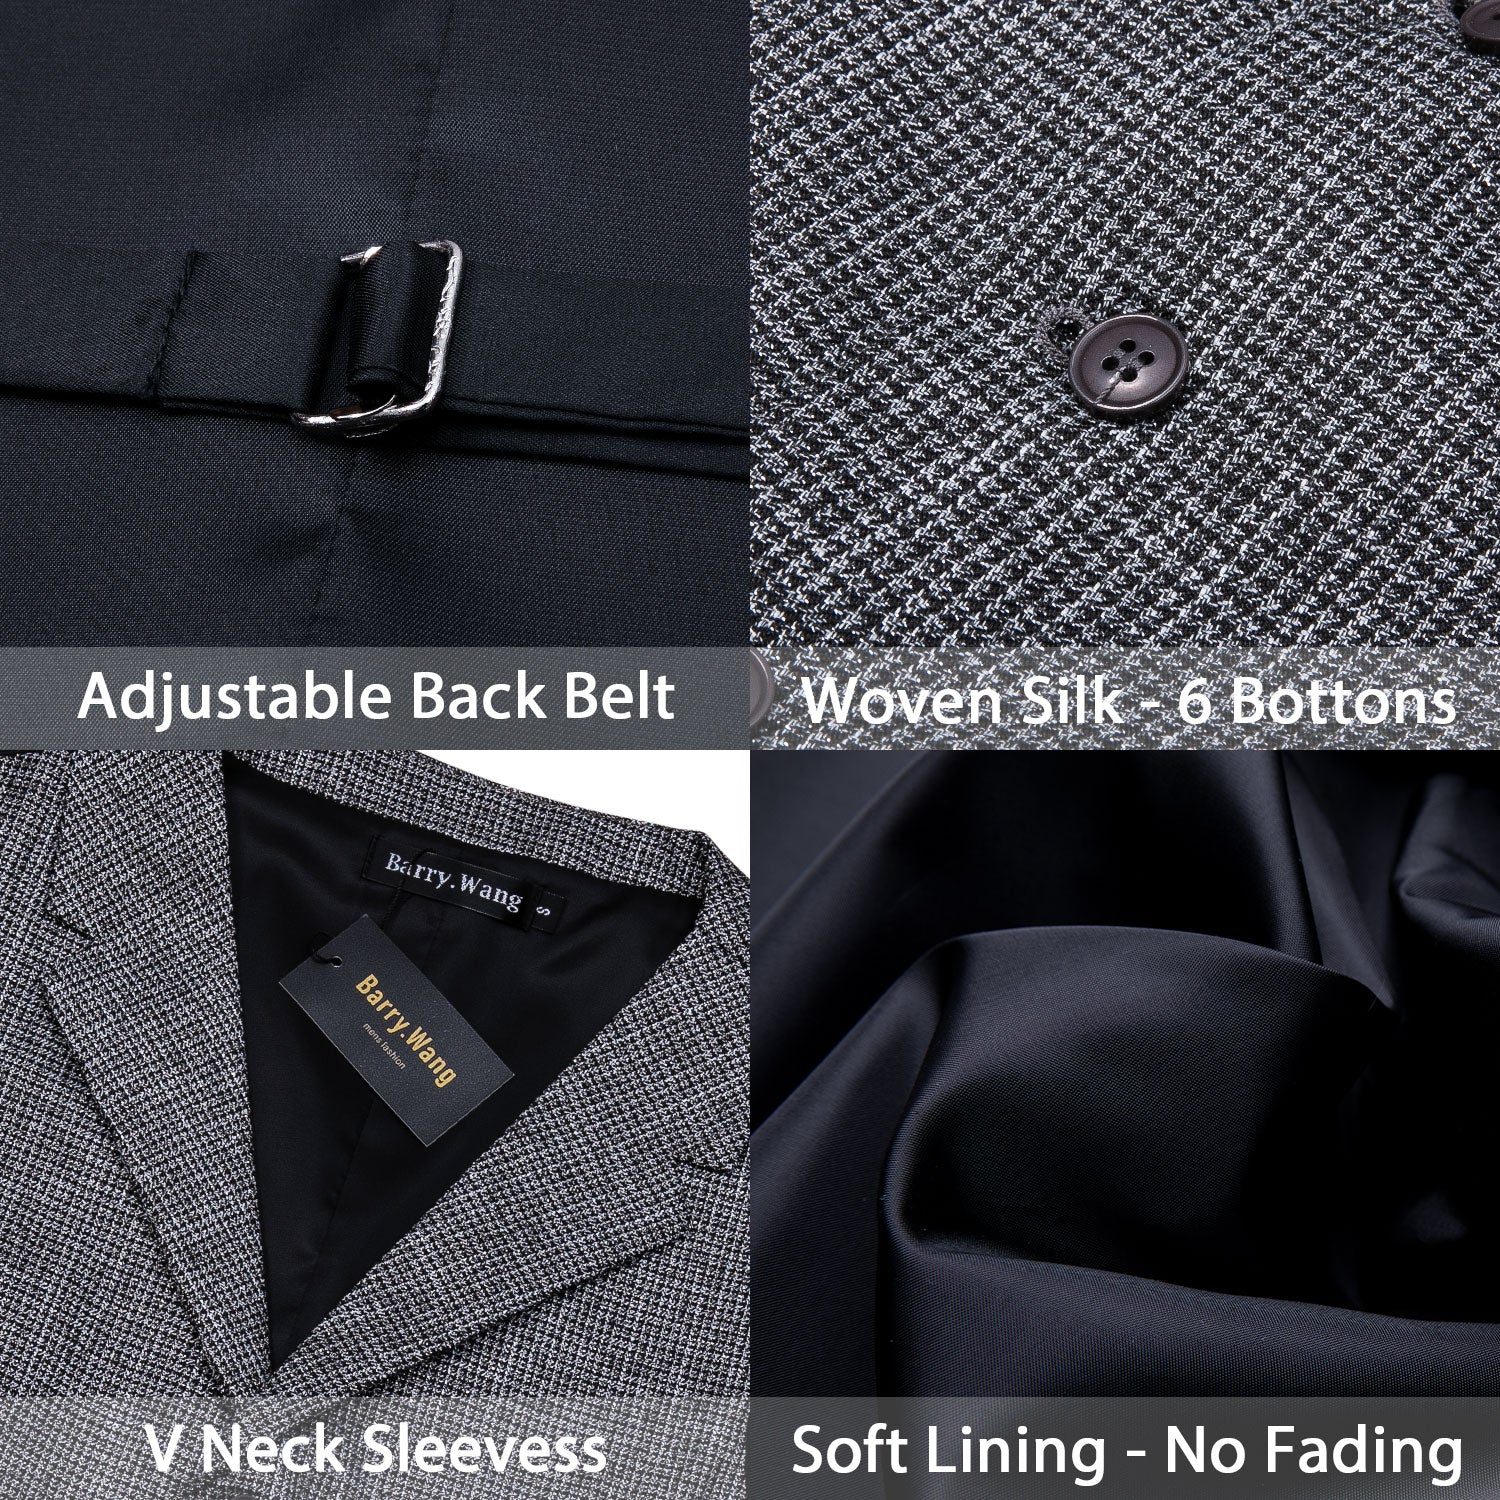 Luxury Men's Novelty Grey Dogstooth Silk Vest